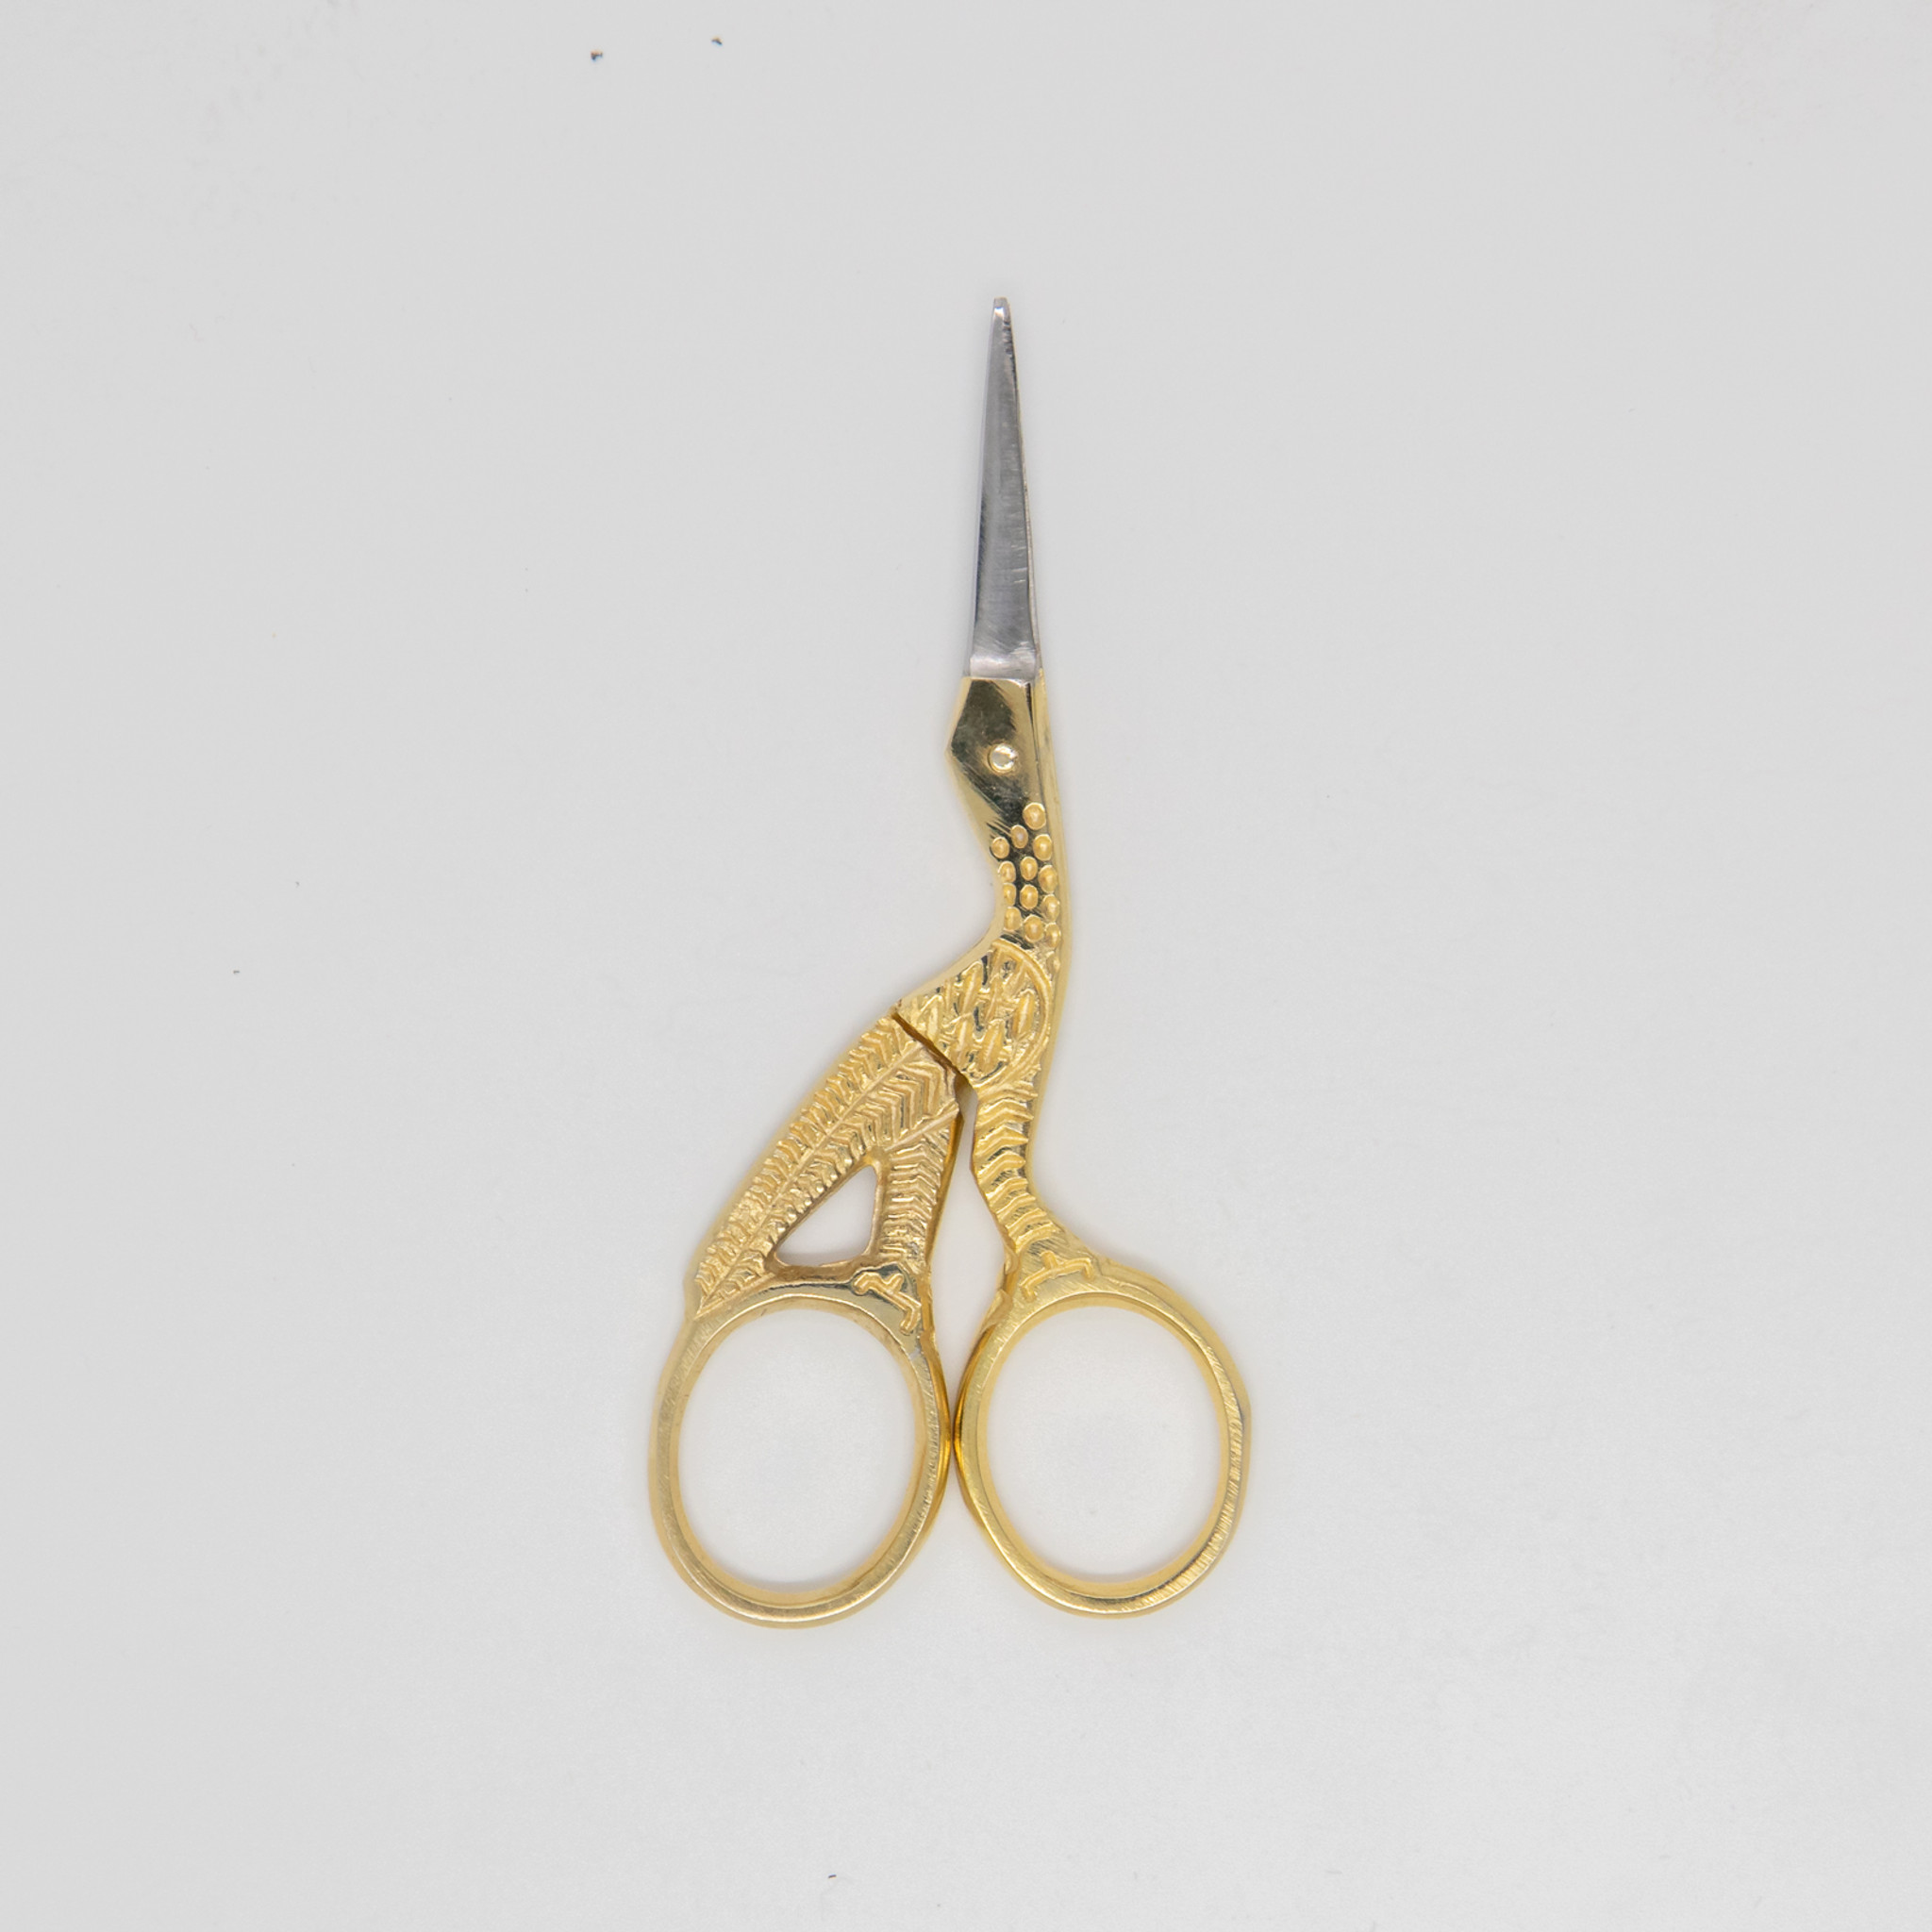 Kelmscott Scissors - Yarnia